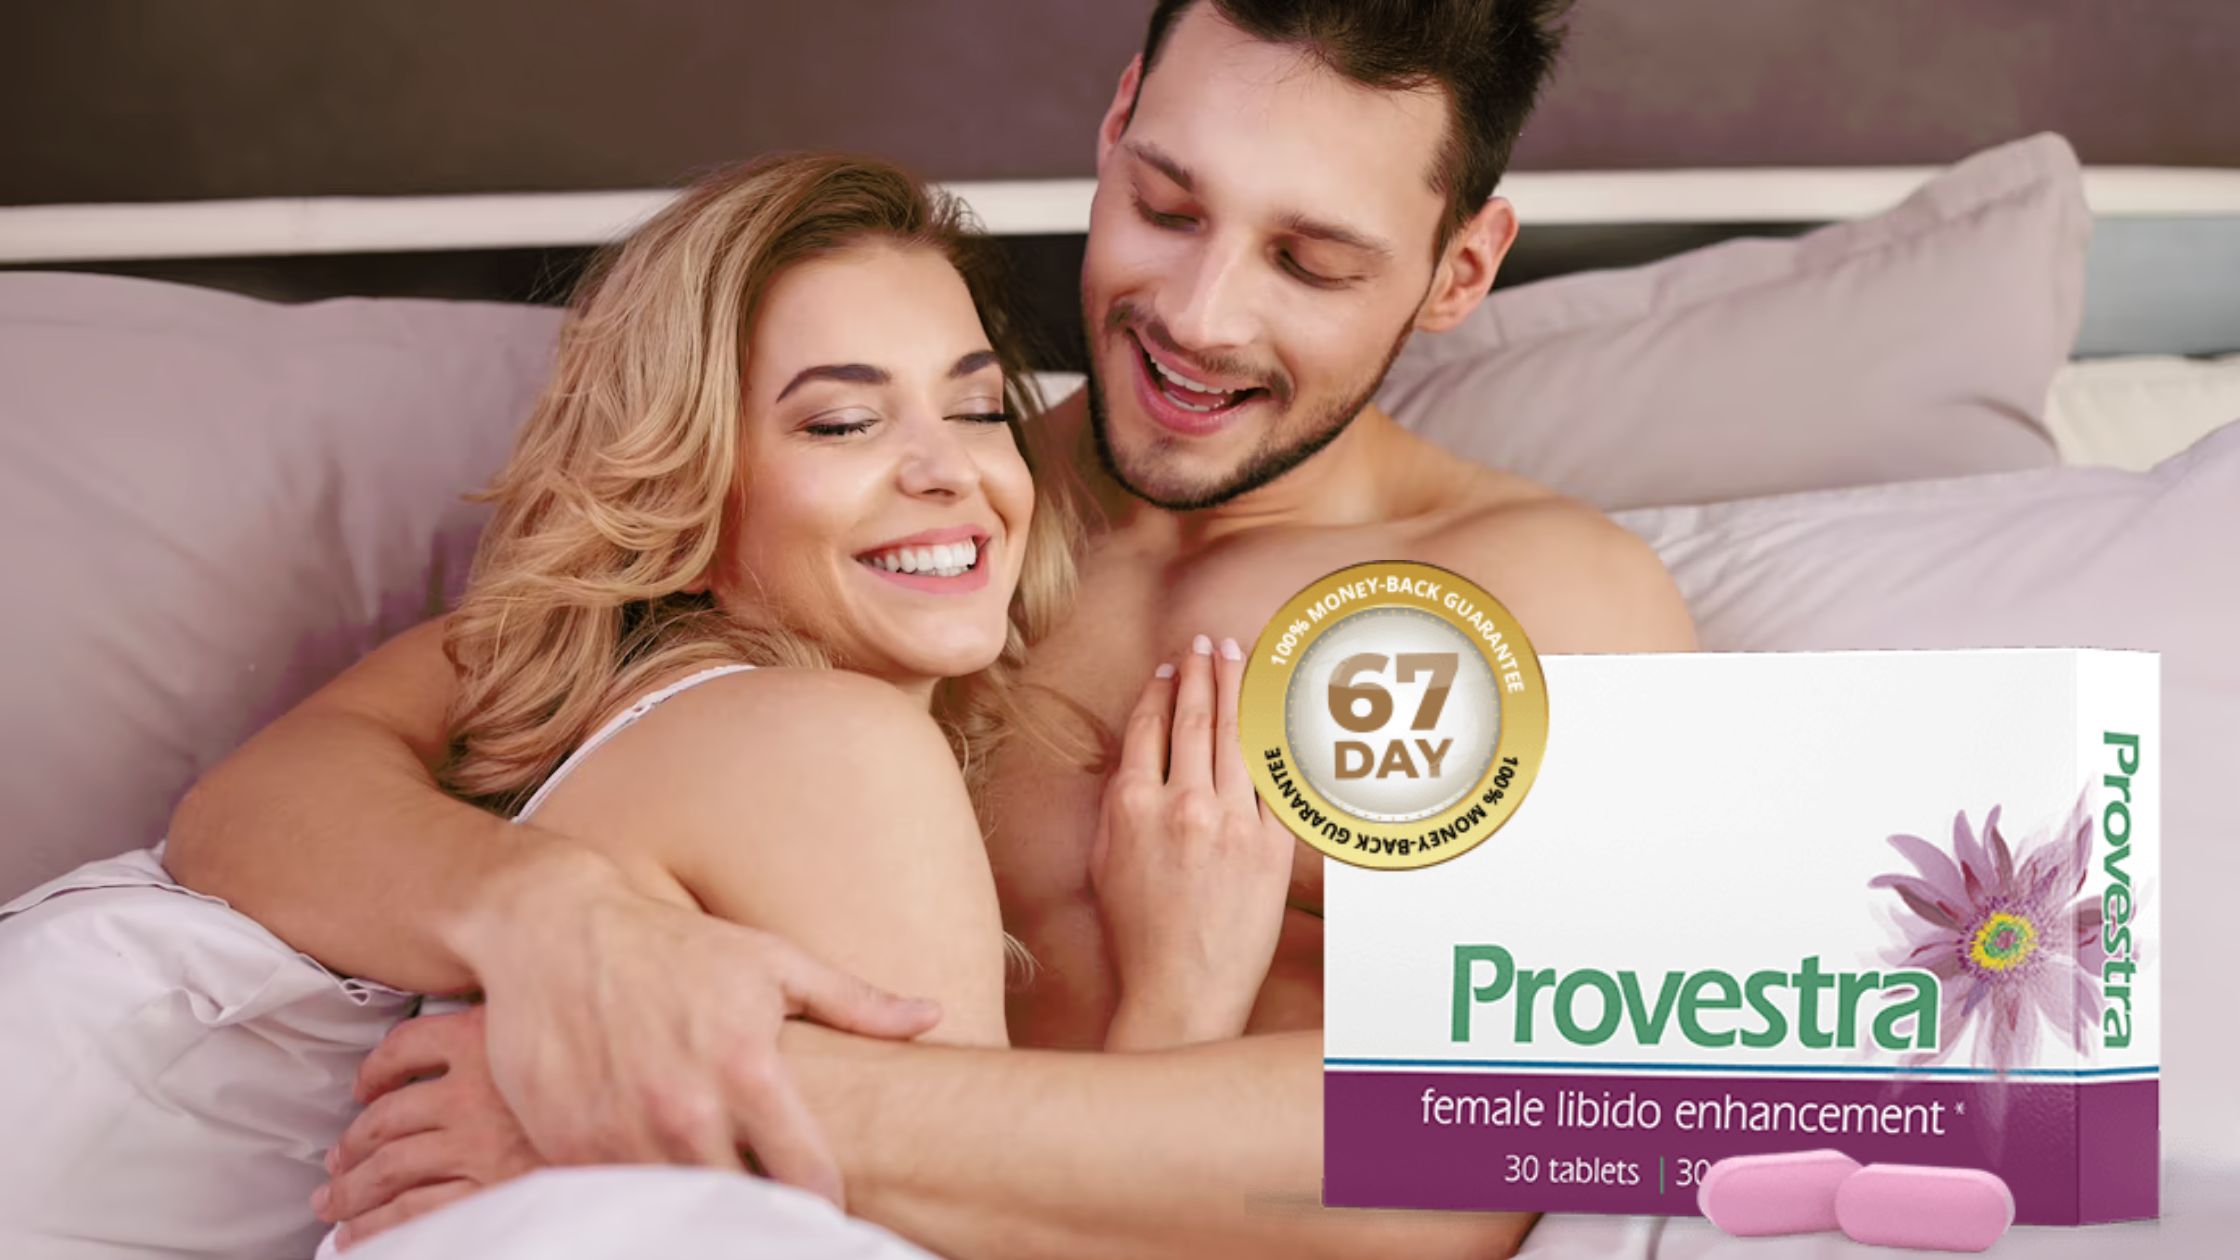 Provestra Review Female Libido Supplement Increase Your Libido